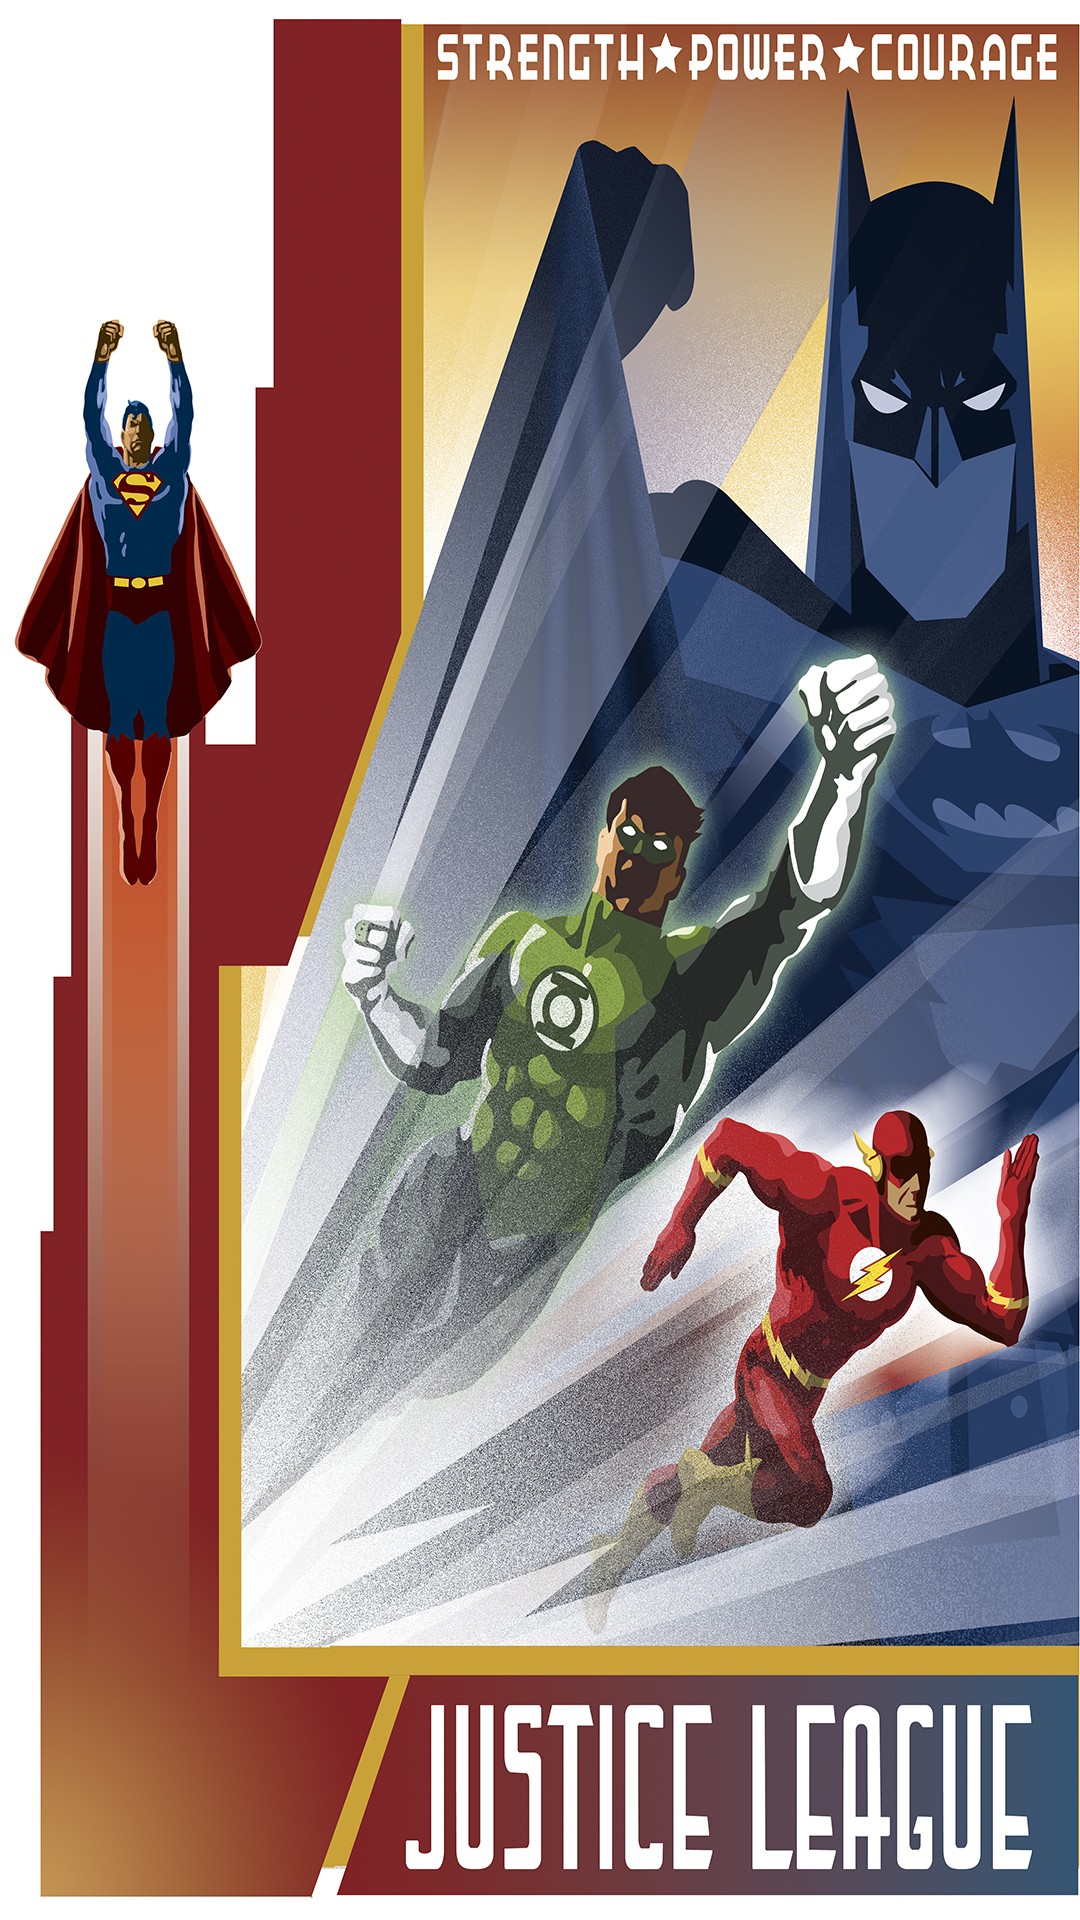 General 1080x1920 Justice League men Batman logo Superman Green Lantern vintage banner superhero The Flash portrait display